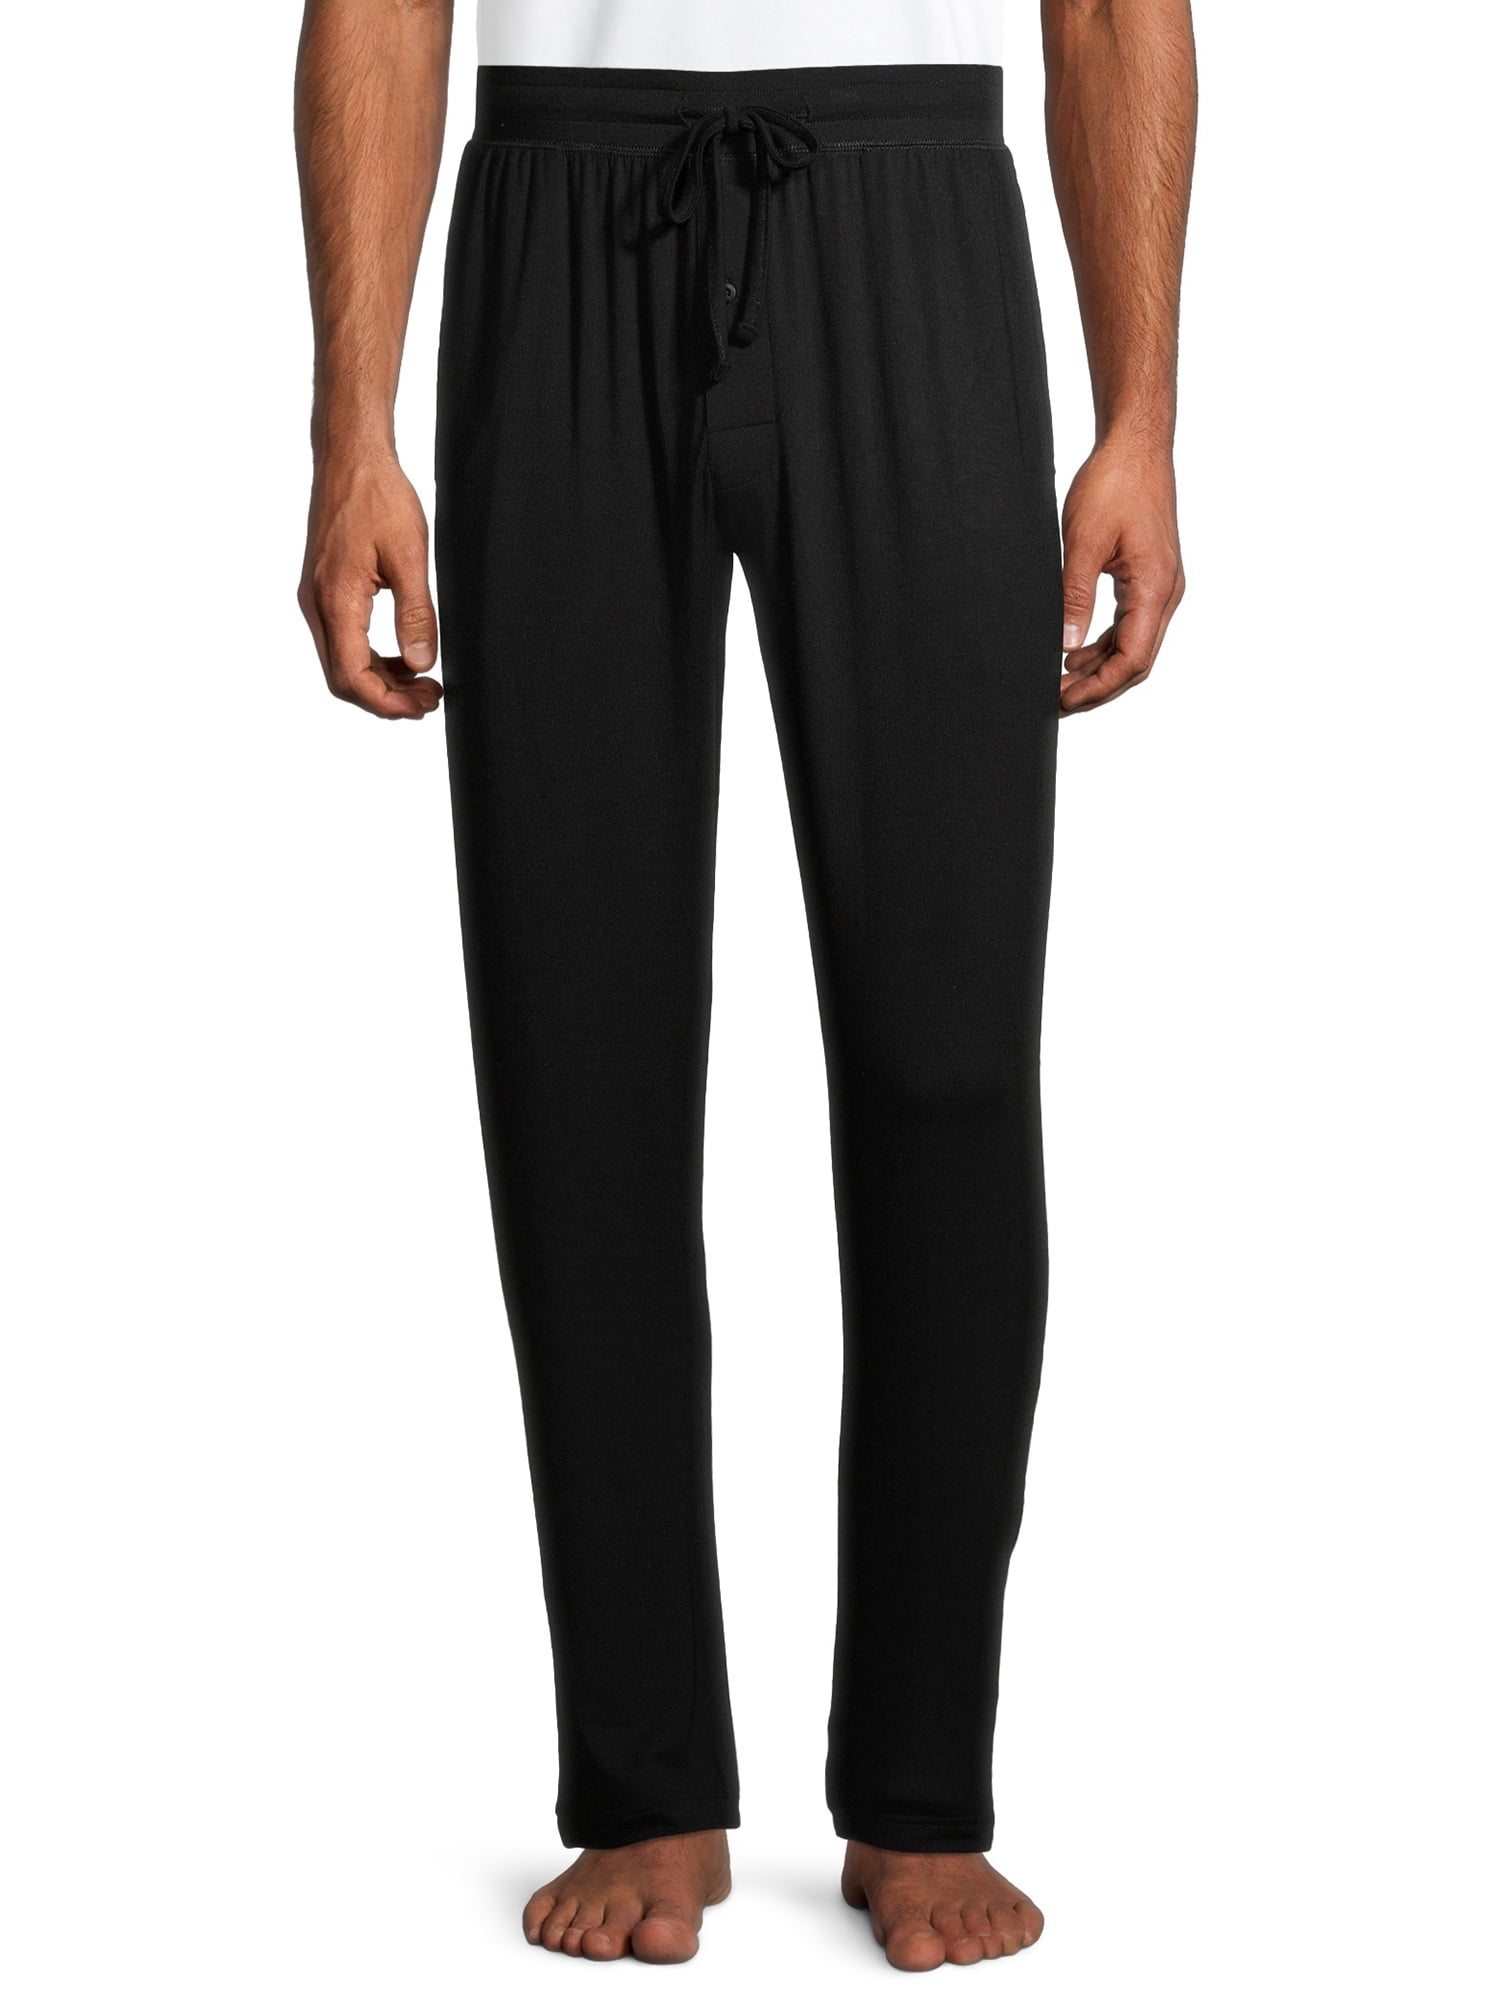 Hanes Men’s Ultrasoft Modal Stretch Cozy Pajama Pants - Walmart.com